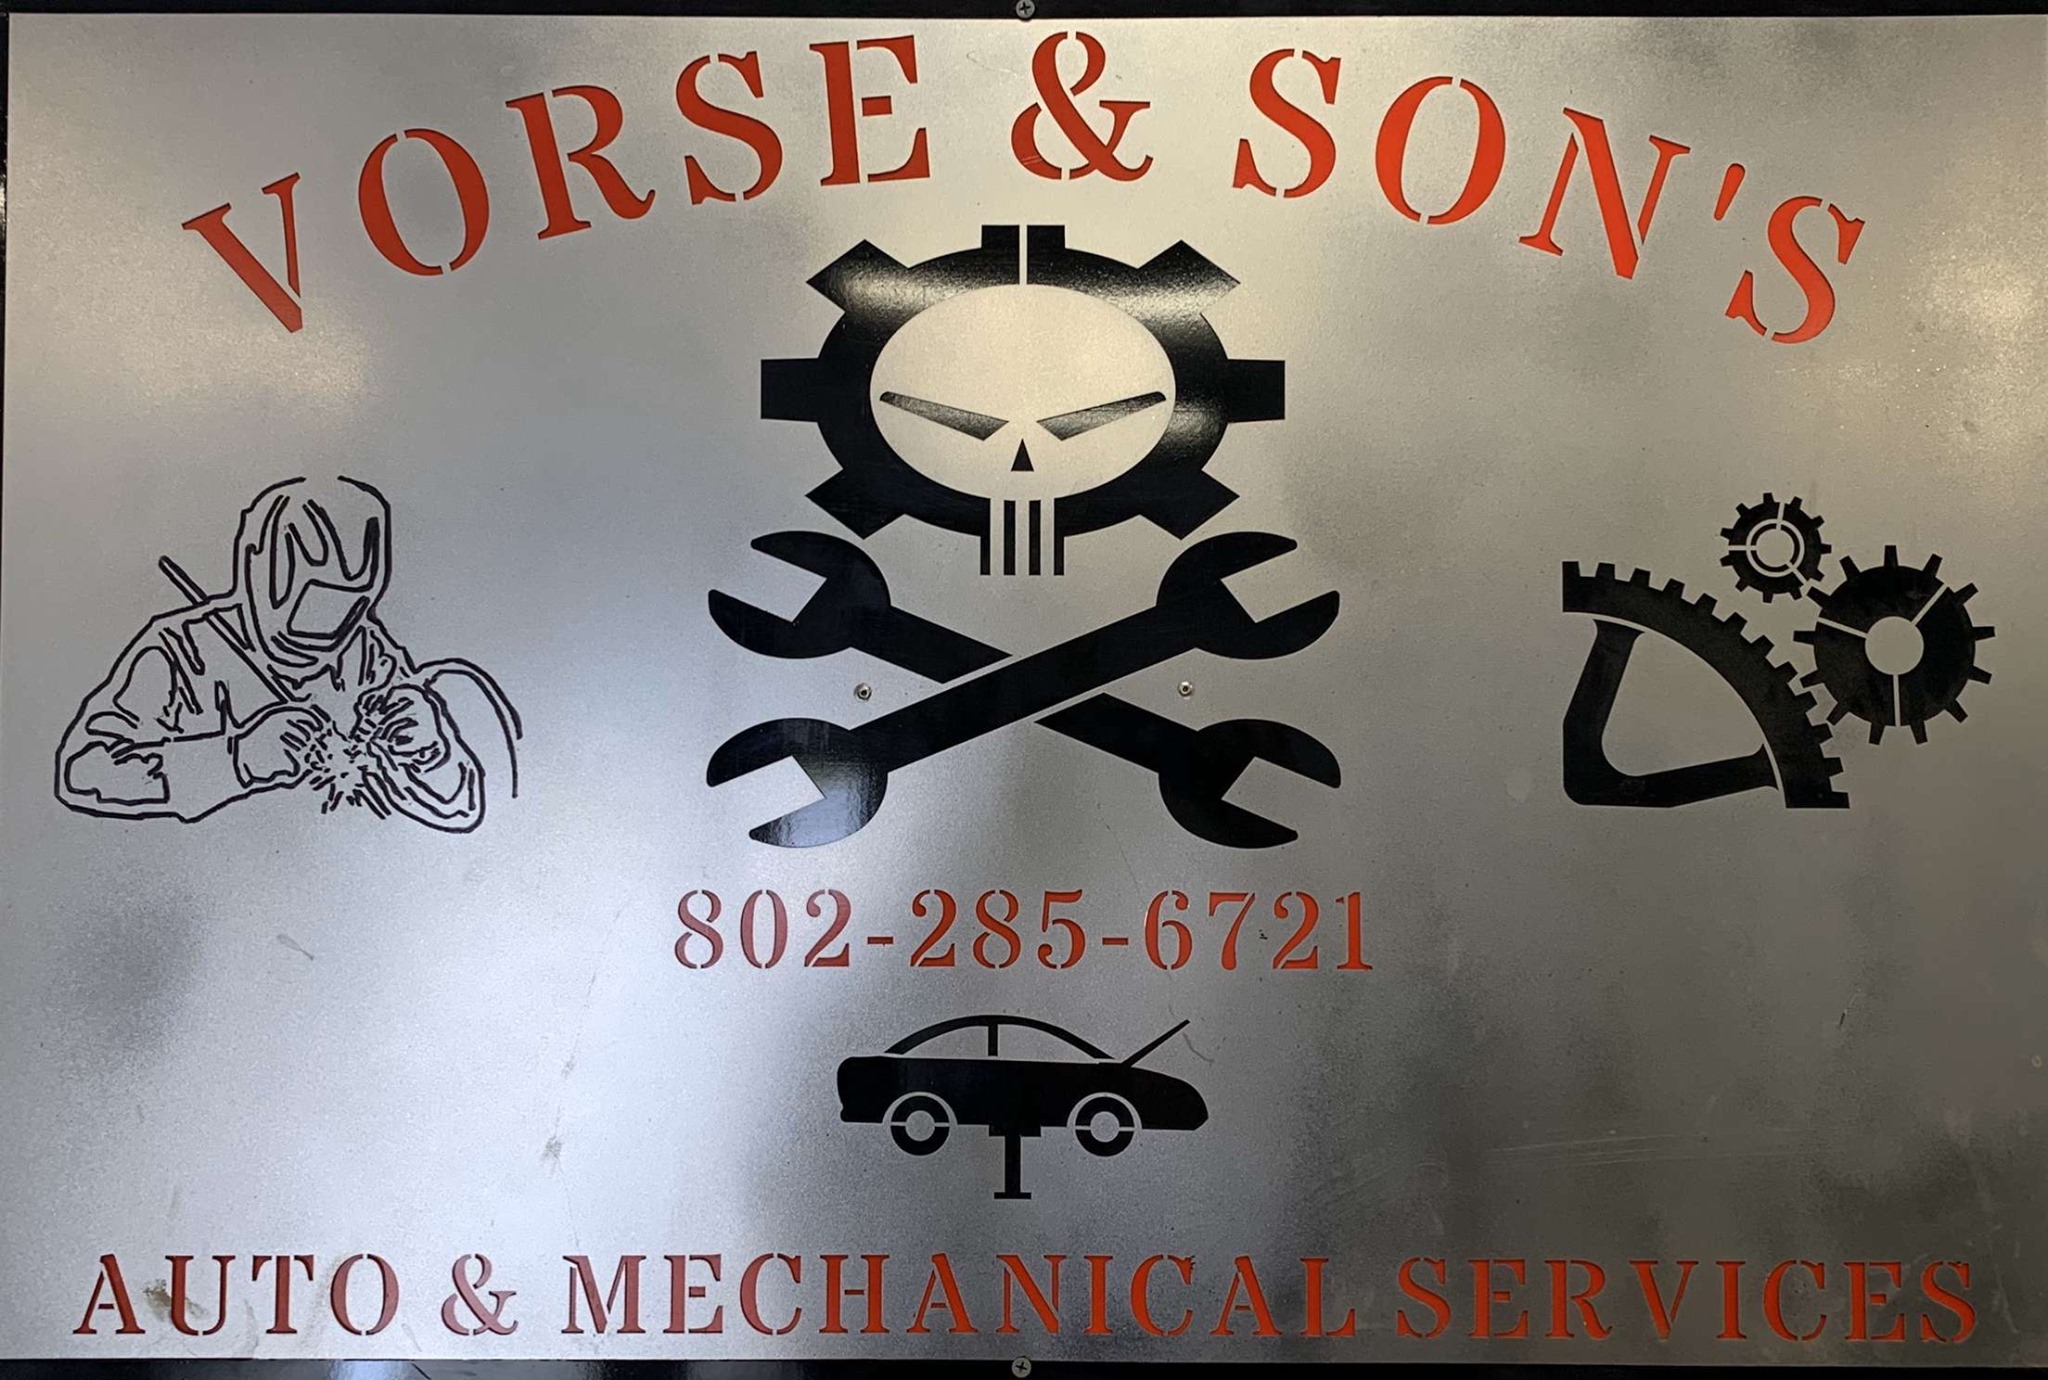 Vorse & Sons Auto and Mechanical Services 2986 Morses Line Rd, Franklin Vermont 05457